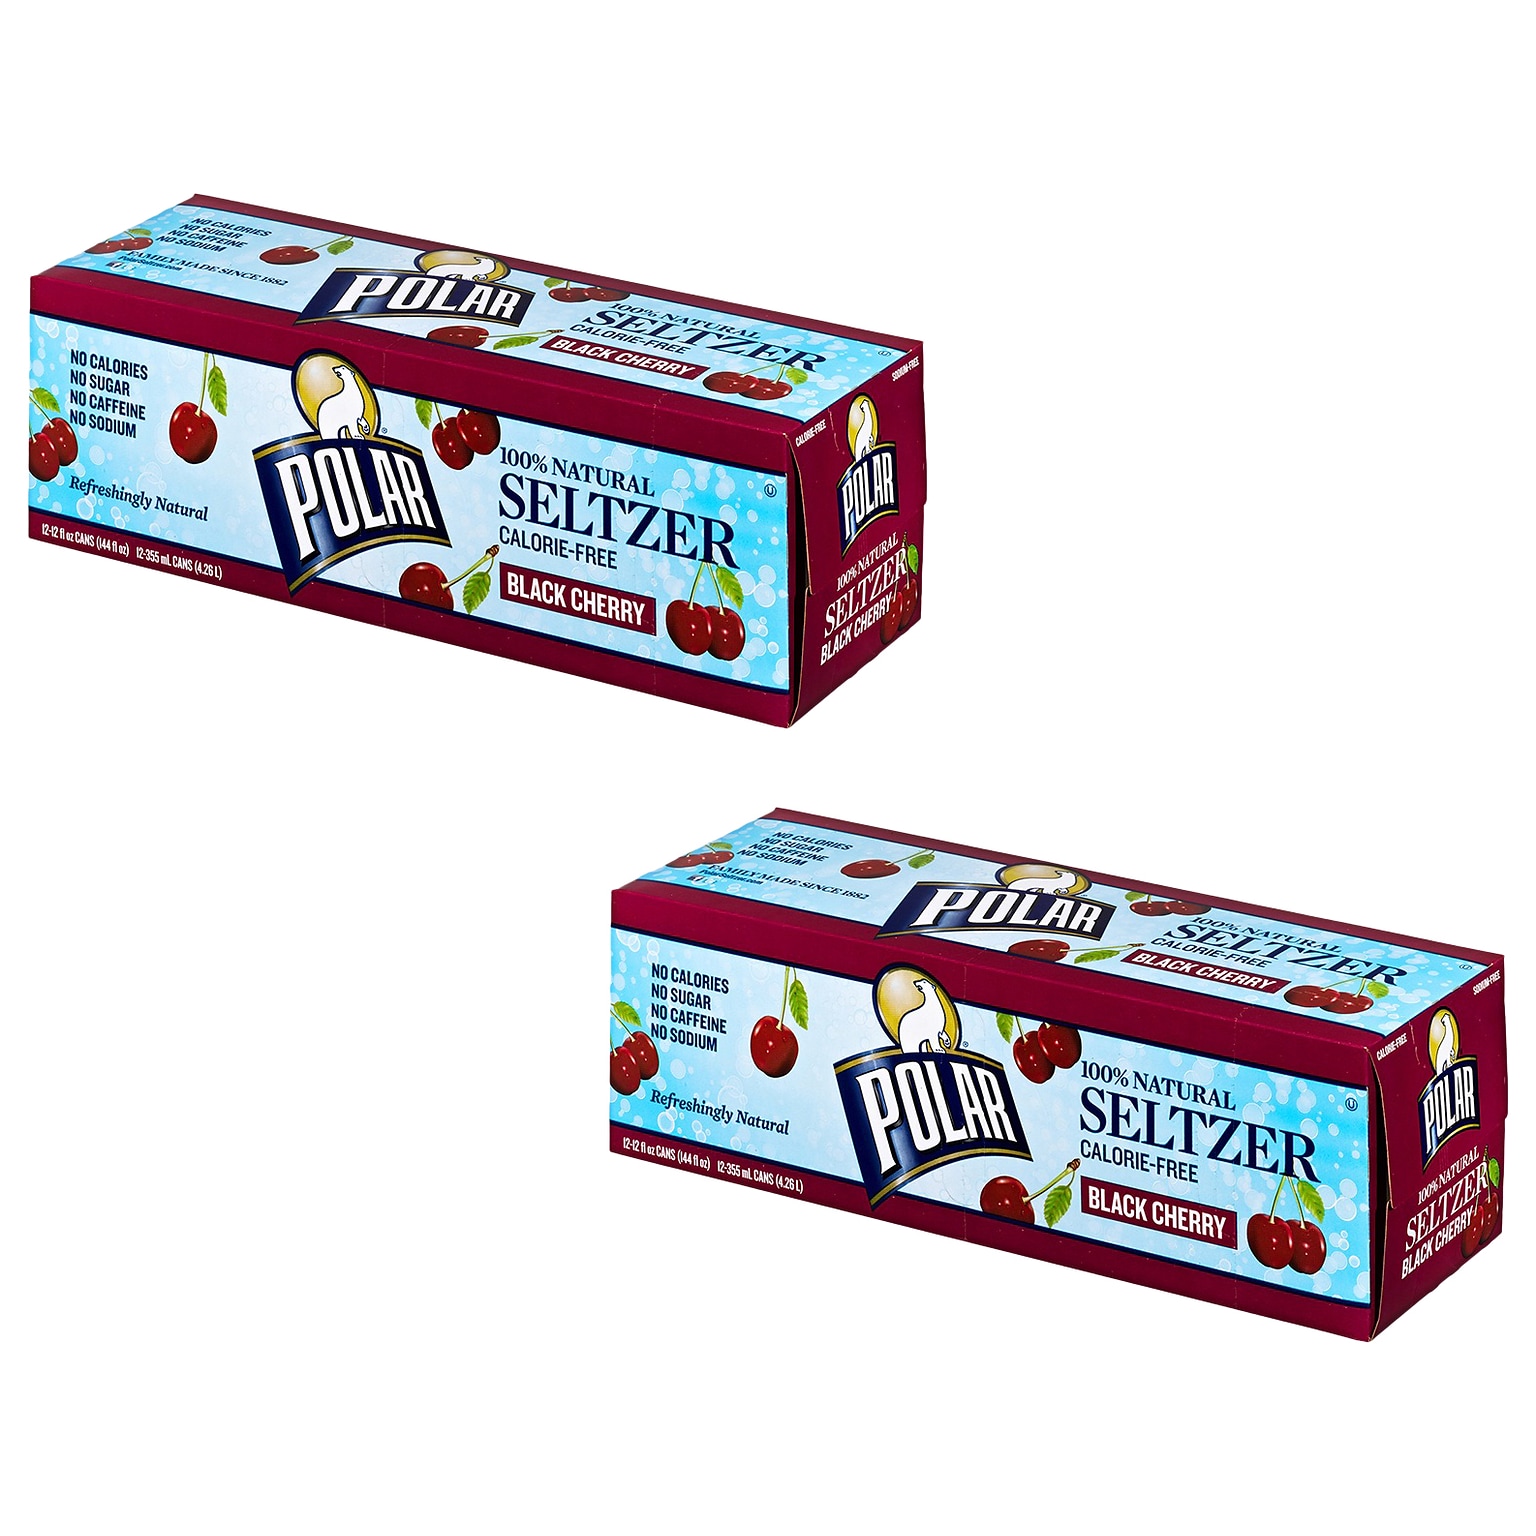 Polar Seltzer Water, 12 Fl. Oz., Black Cherry, 12/Carton, 2 Cartons/Pack (1000228)